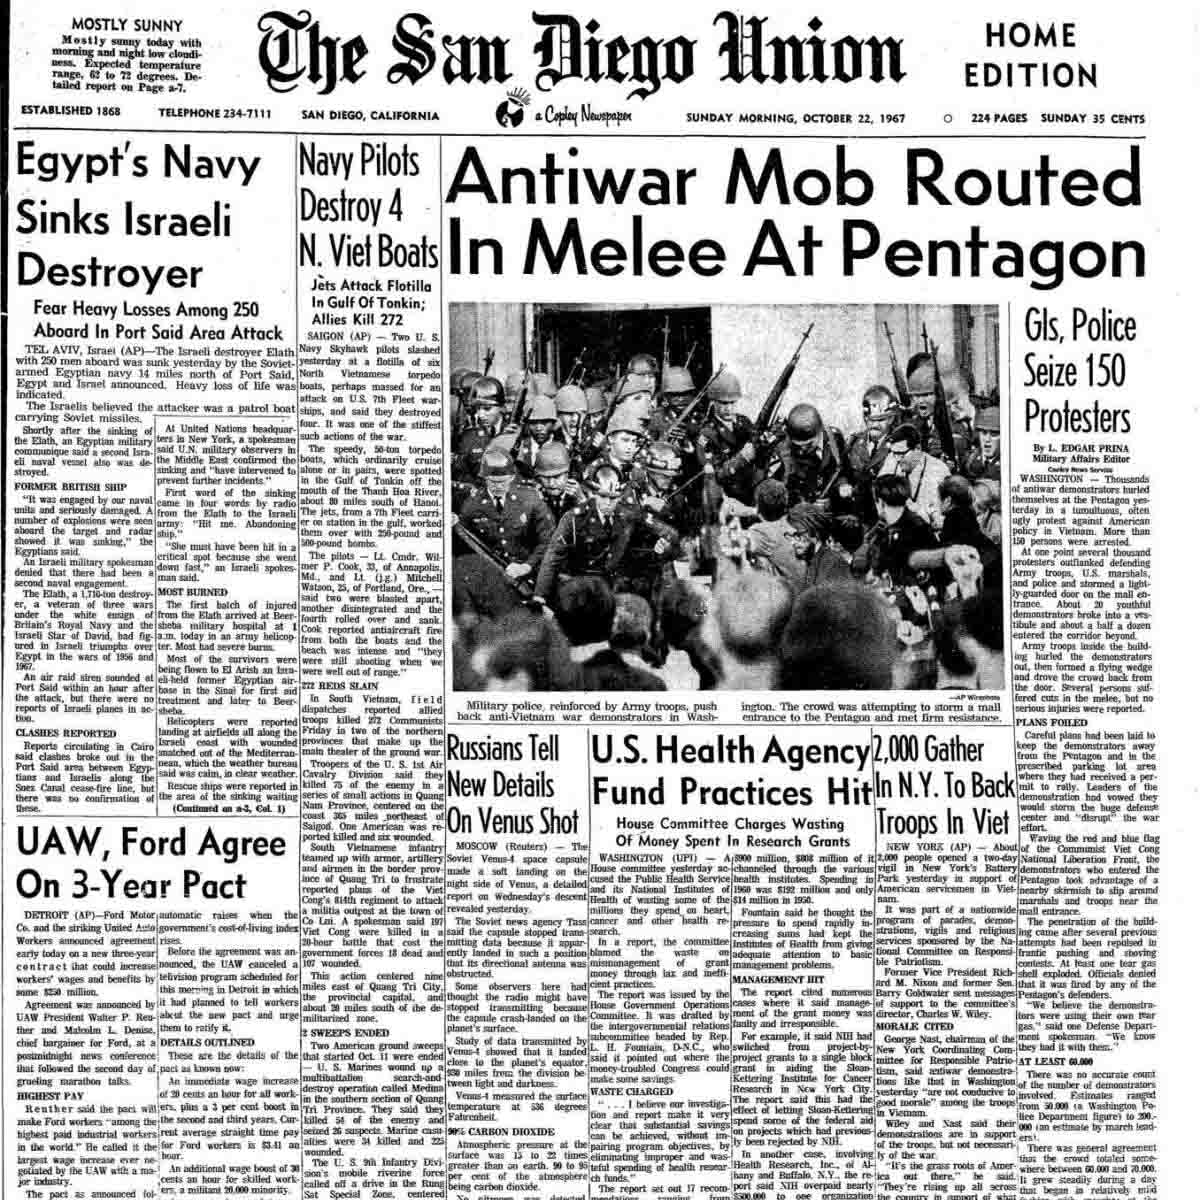 1967 San Diego Union Newspaper Headline on Pentagon Anti-War Protest